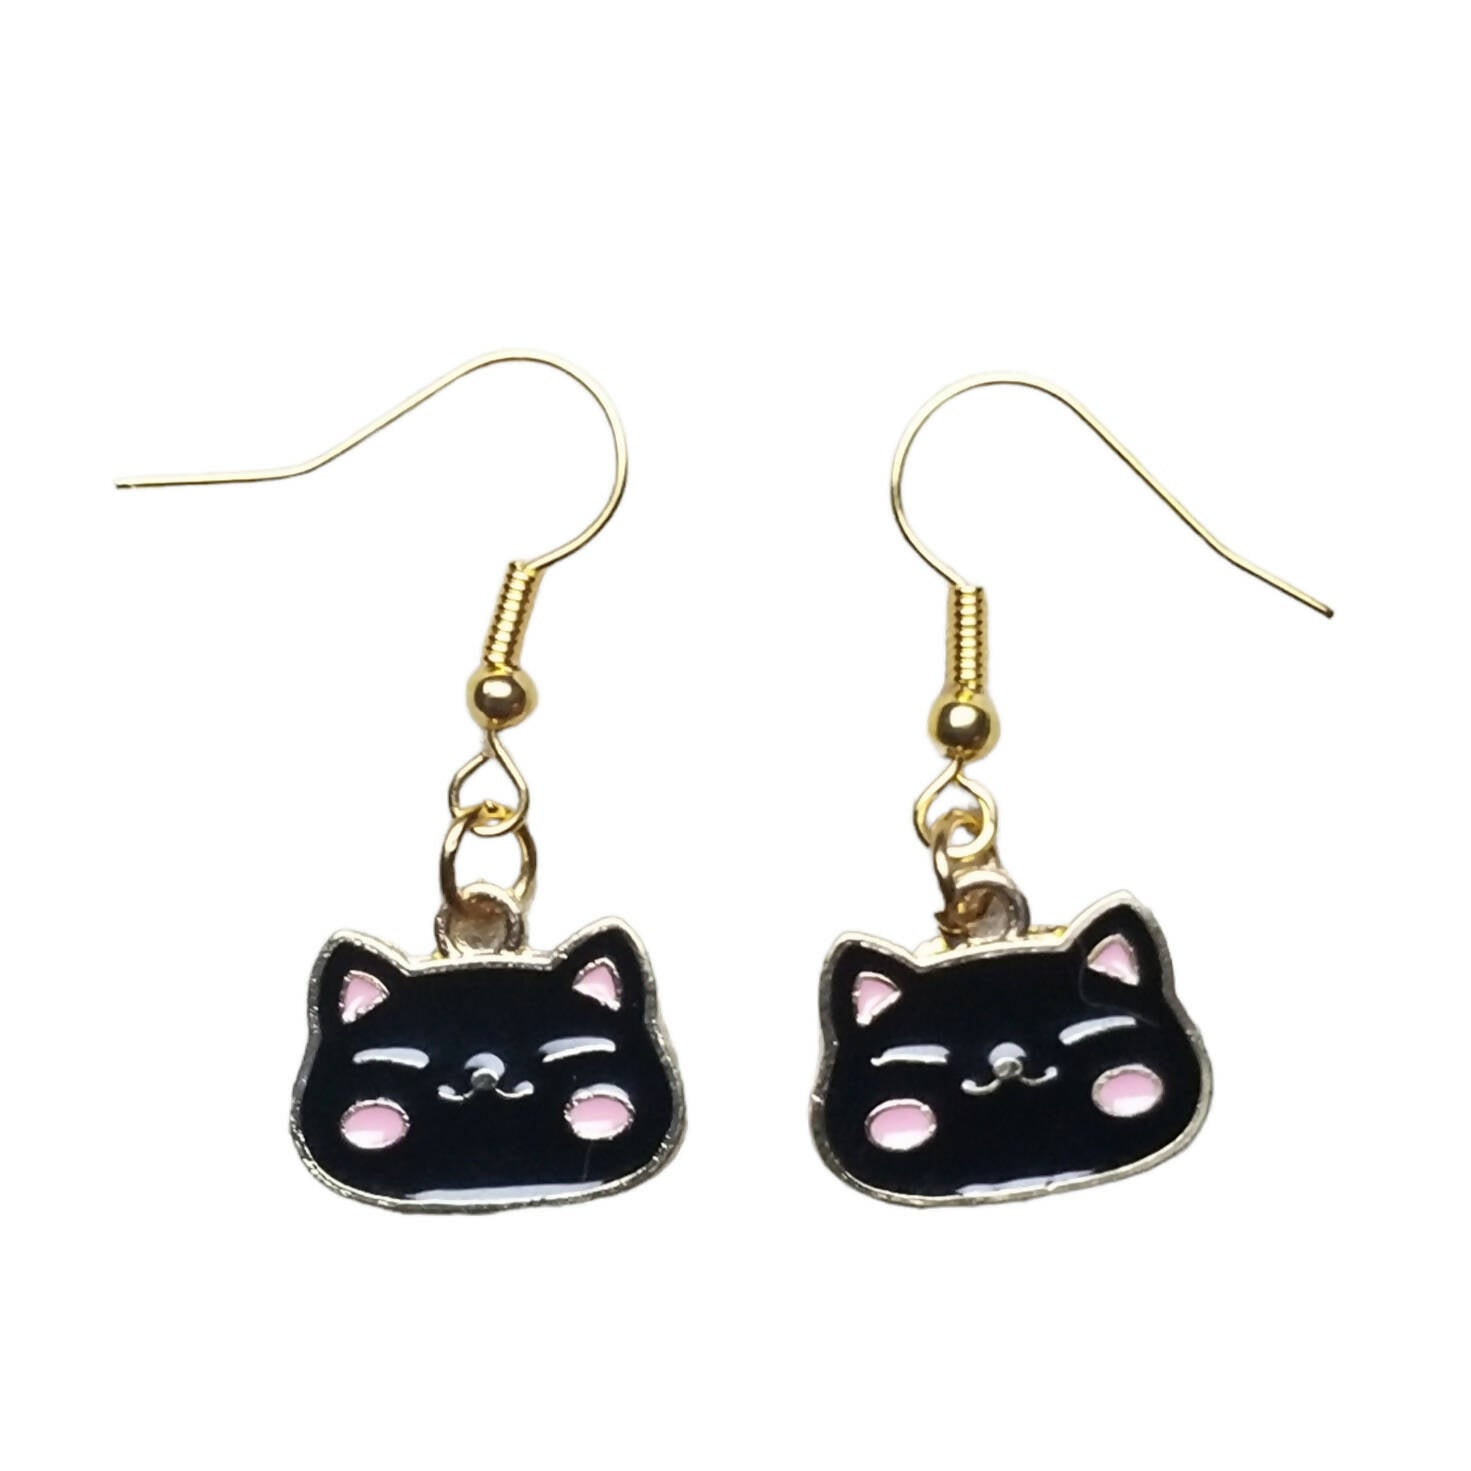 Smiling cat earrings